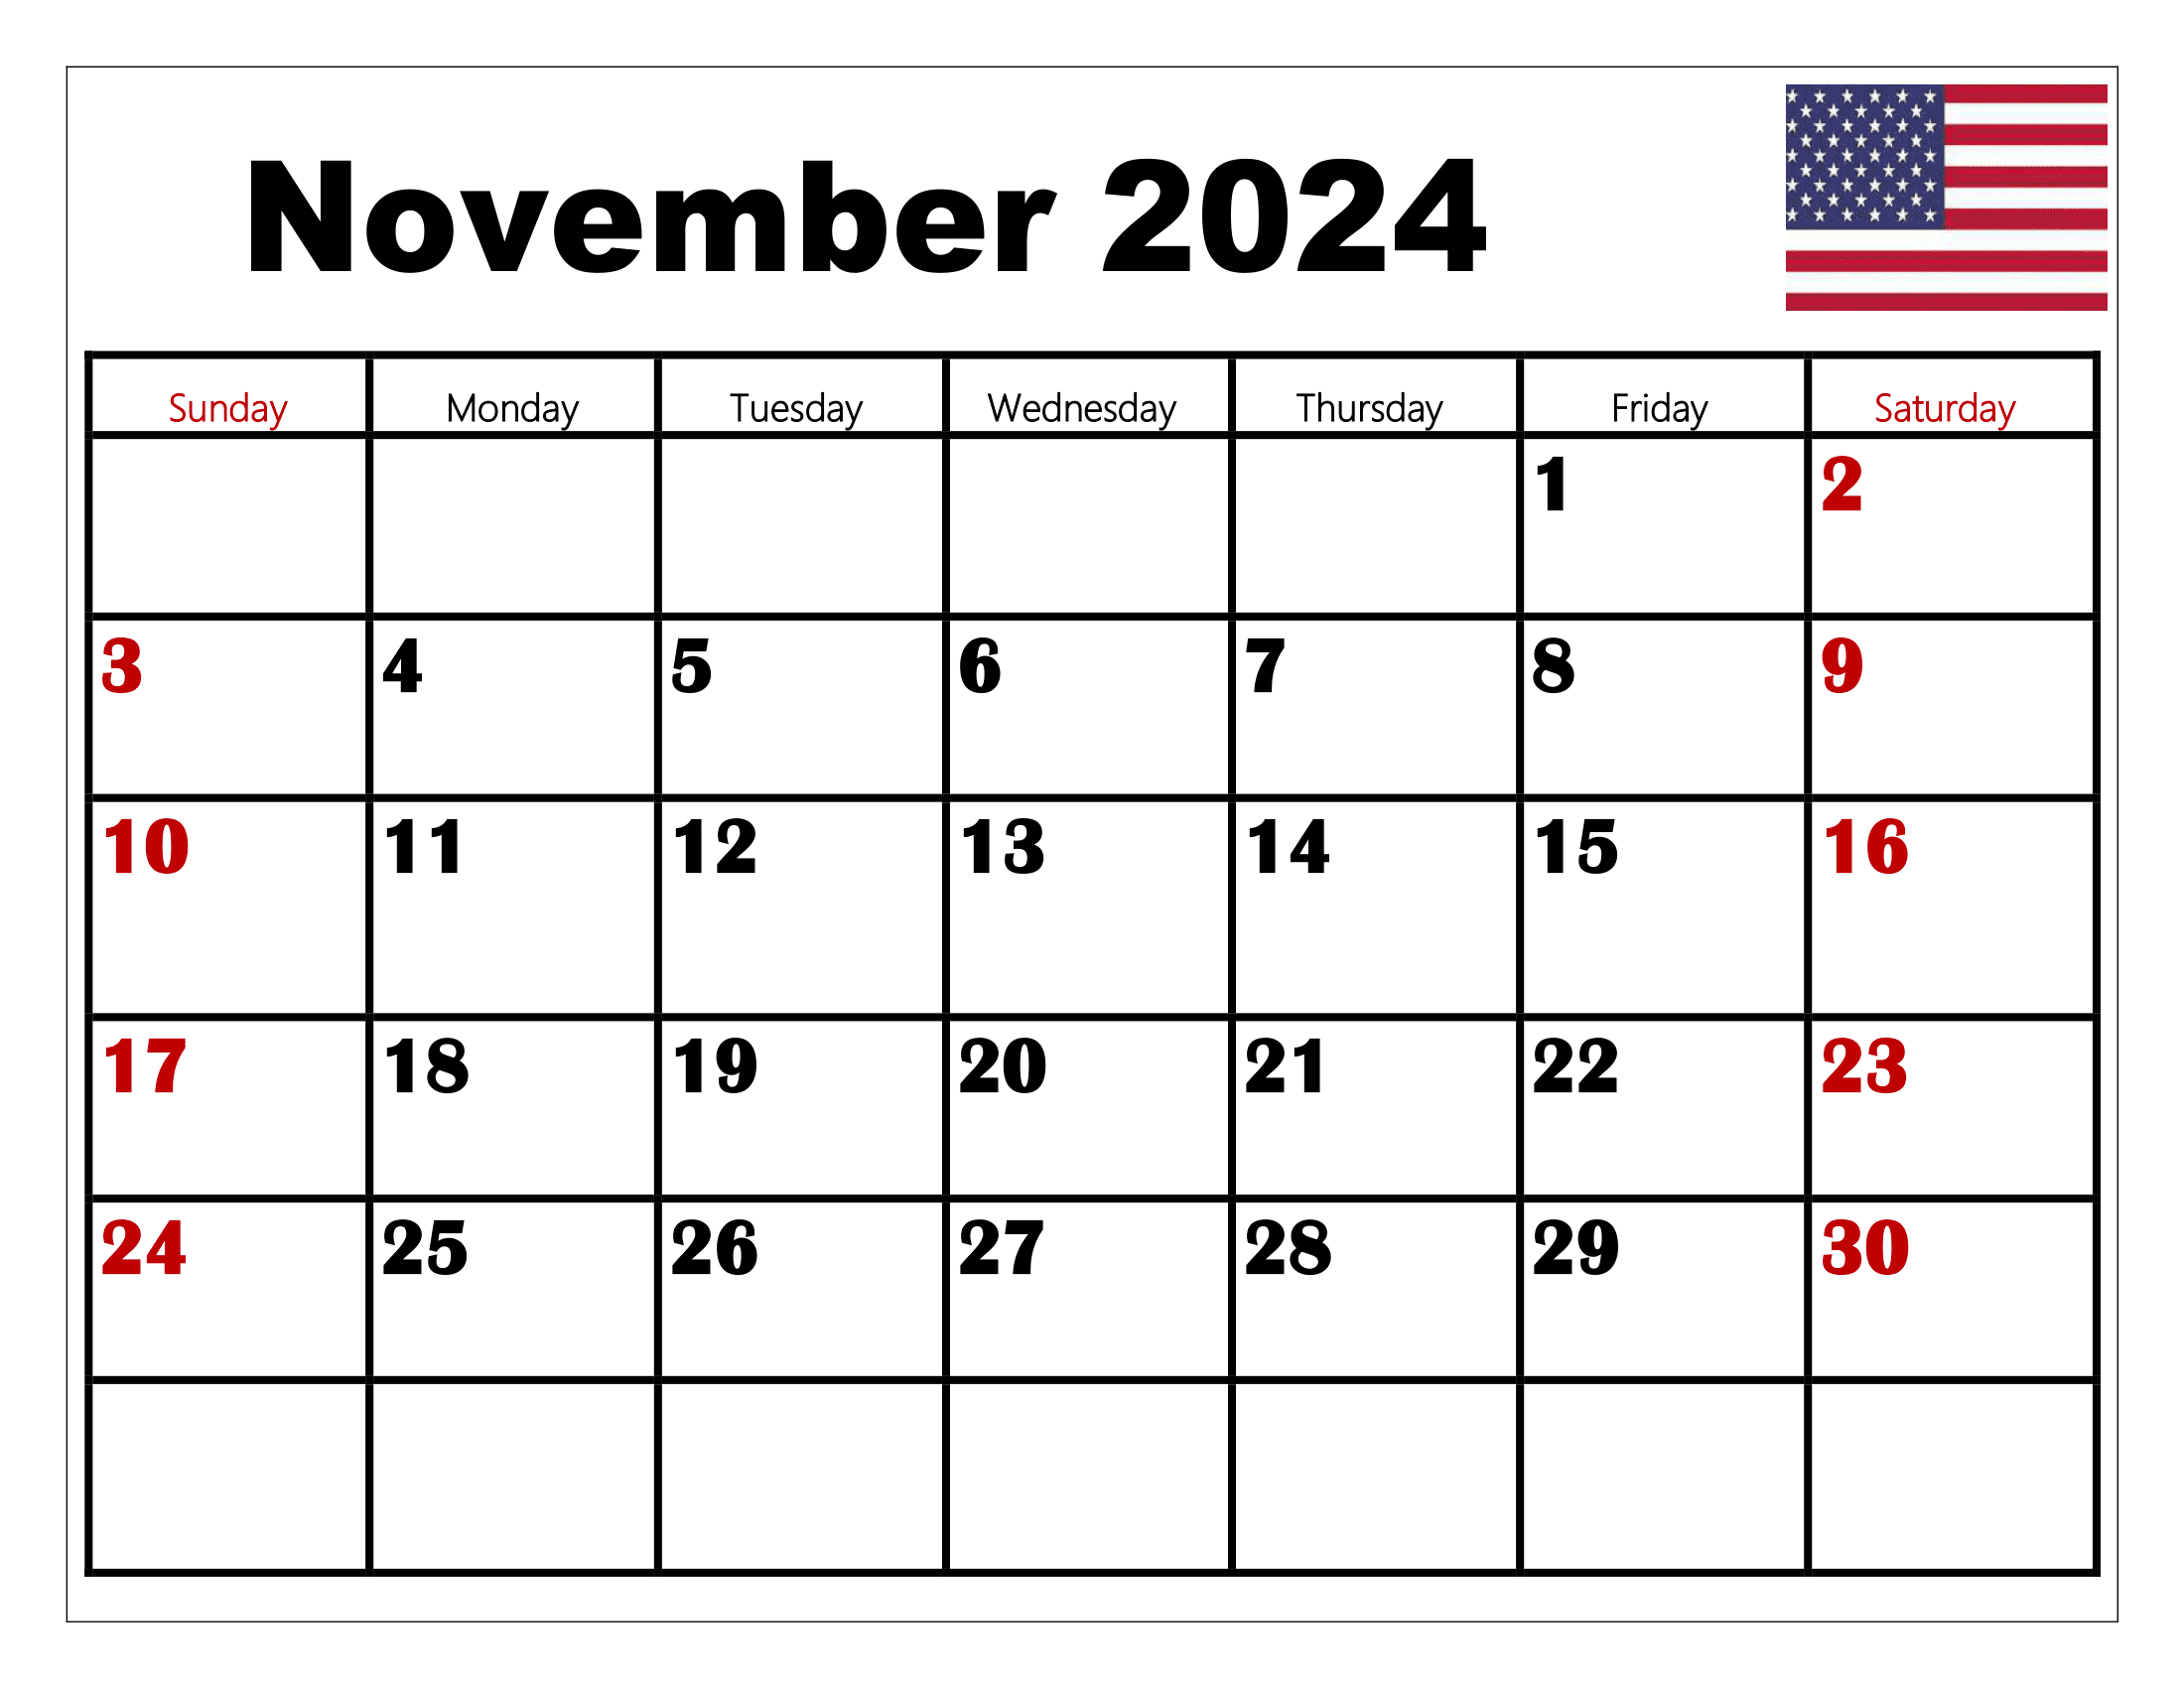 November 2024 Calendar Printable Pdf Template With Holidays for November 2024 Printable Calendar